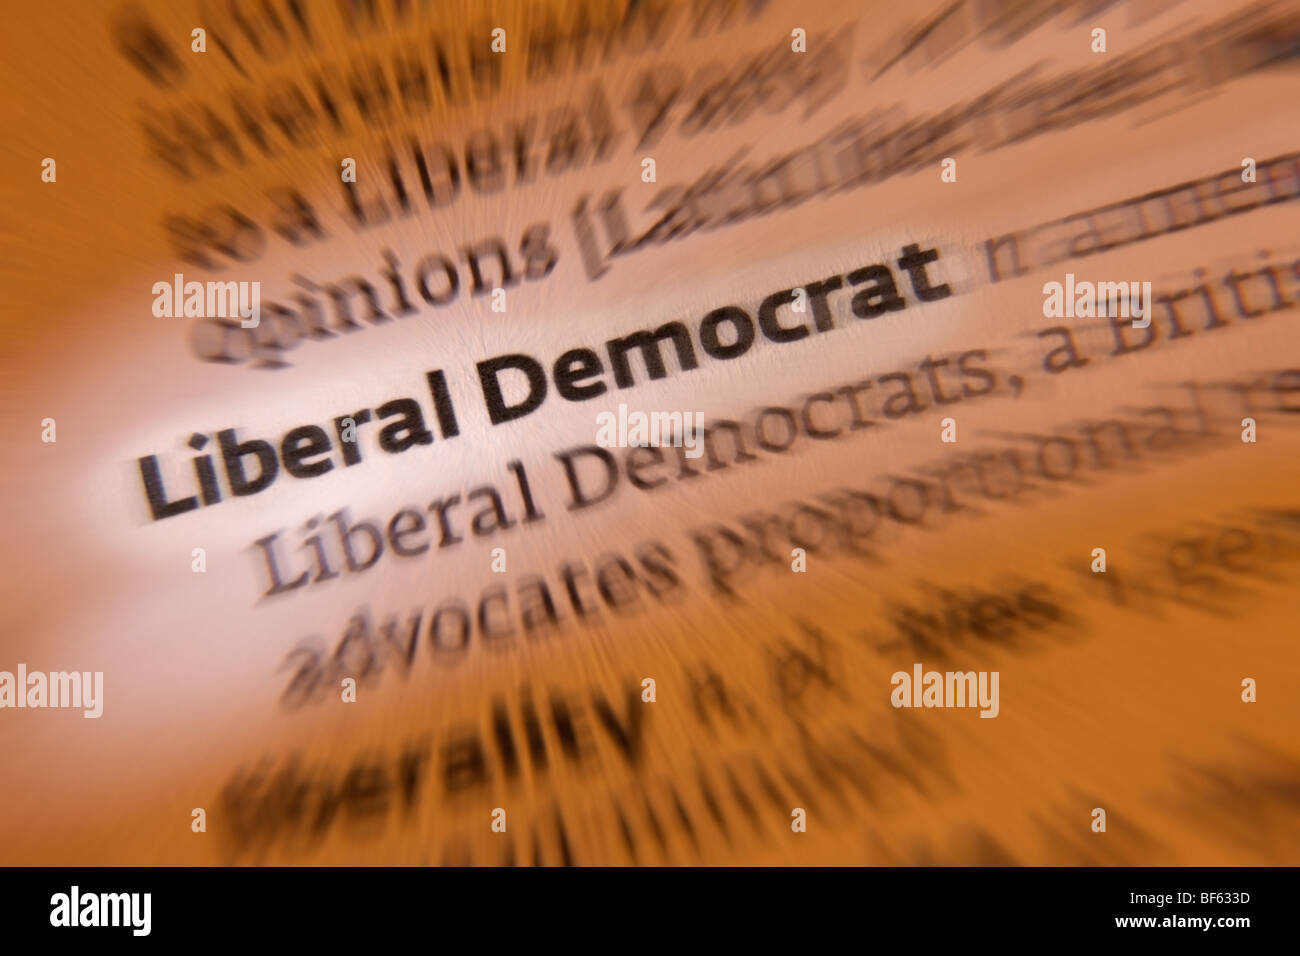 British Politics - Liberal Democrat Party Stock Photo